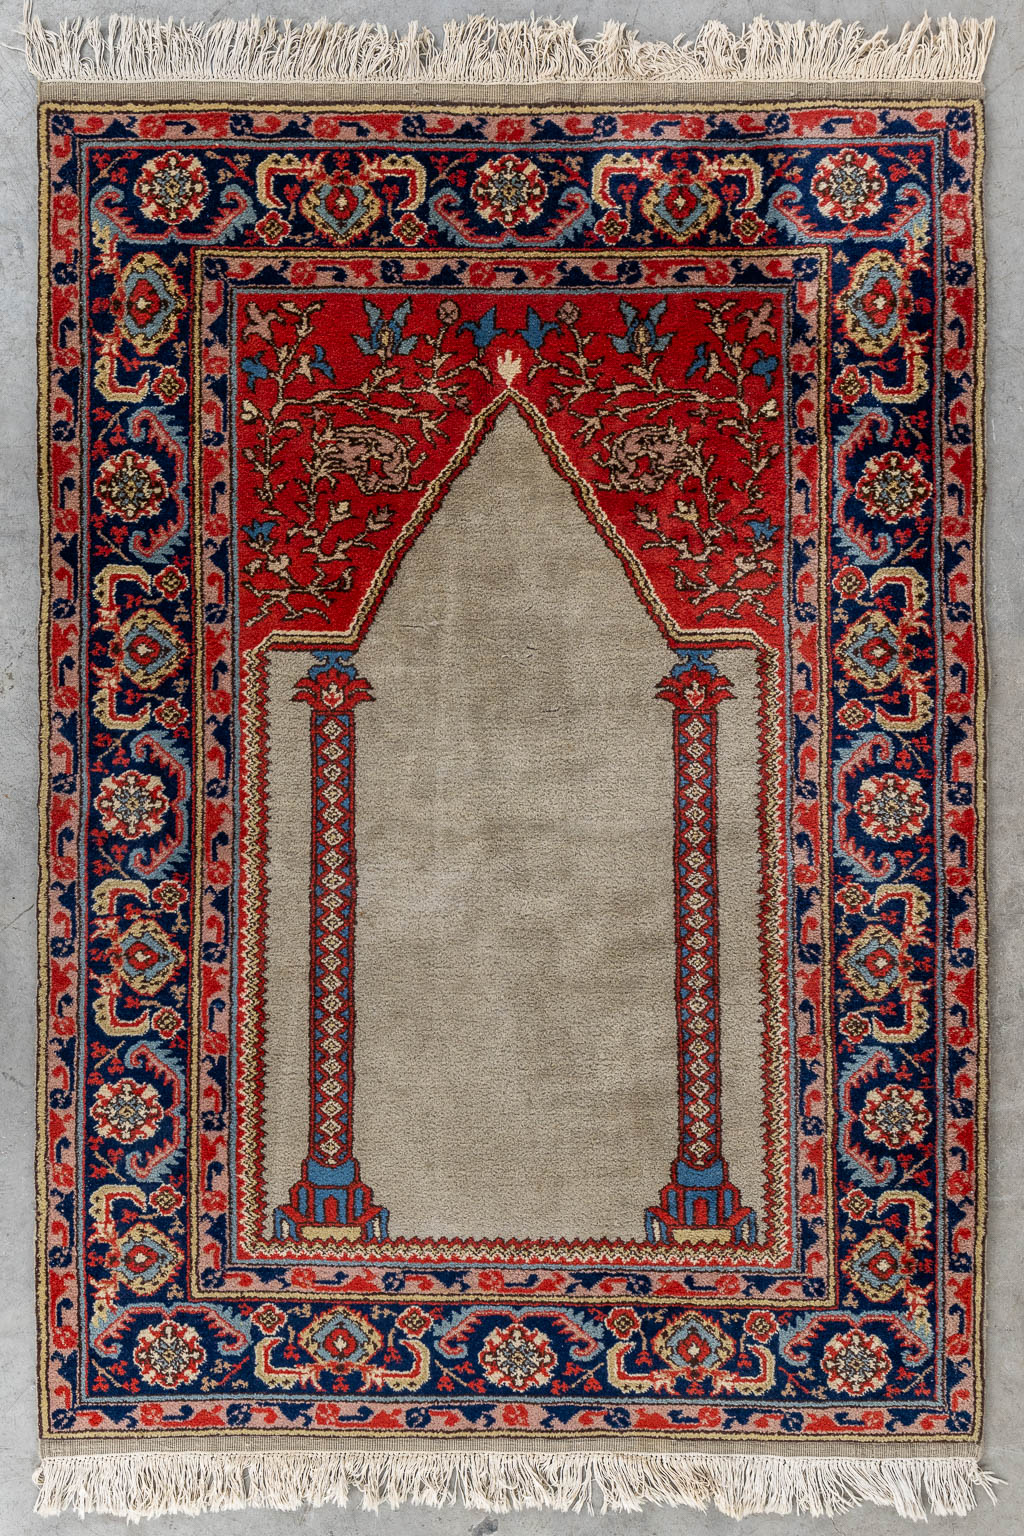 Lot 205 Een Oosters handgeknoopt tapijt, Kayseri. (L:180 x W:128 cm)